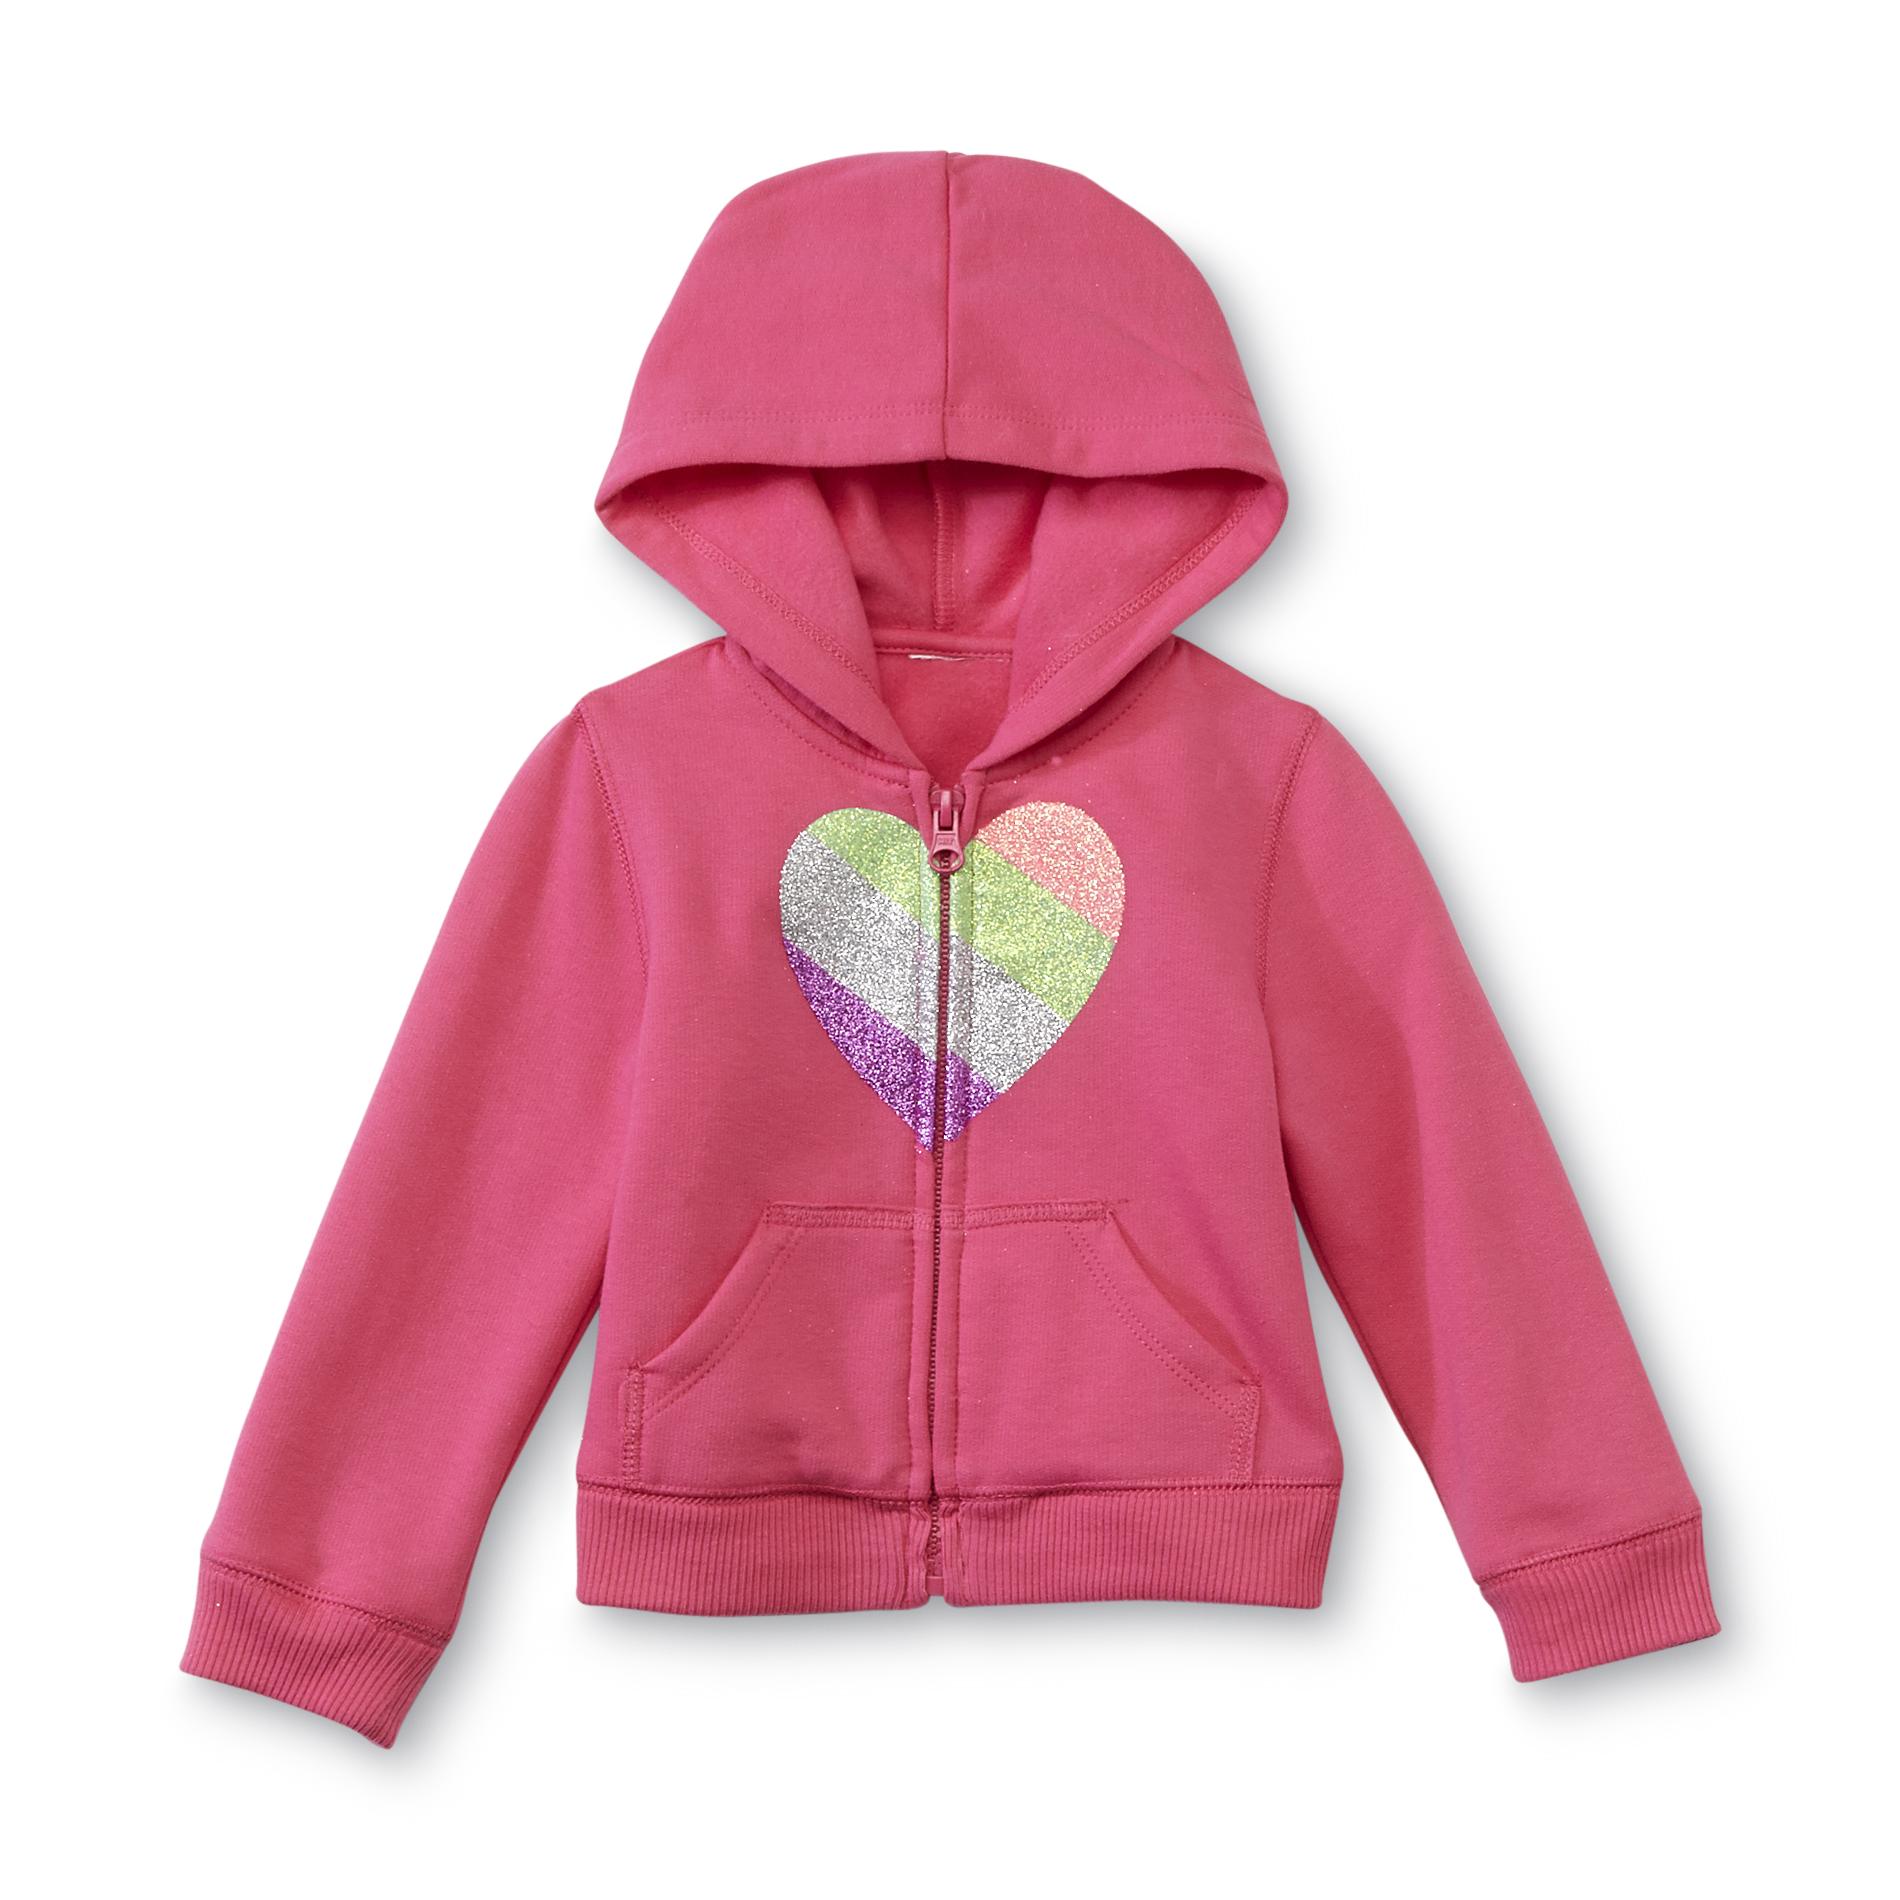 WonderKids Infant & Toddler Girl's Hoodie Jacket - Heart